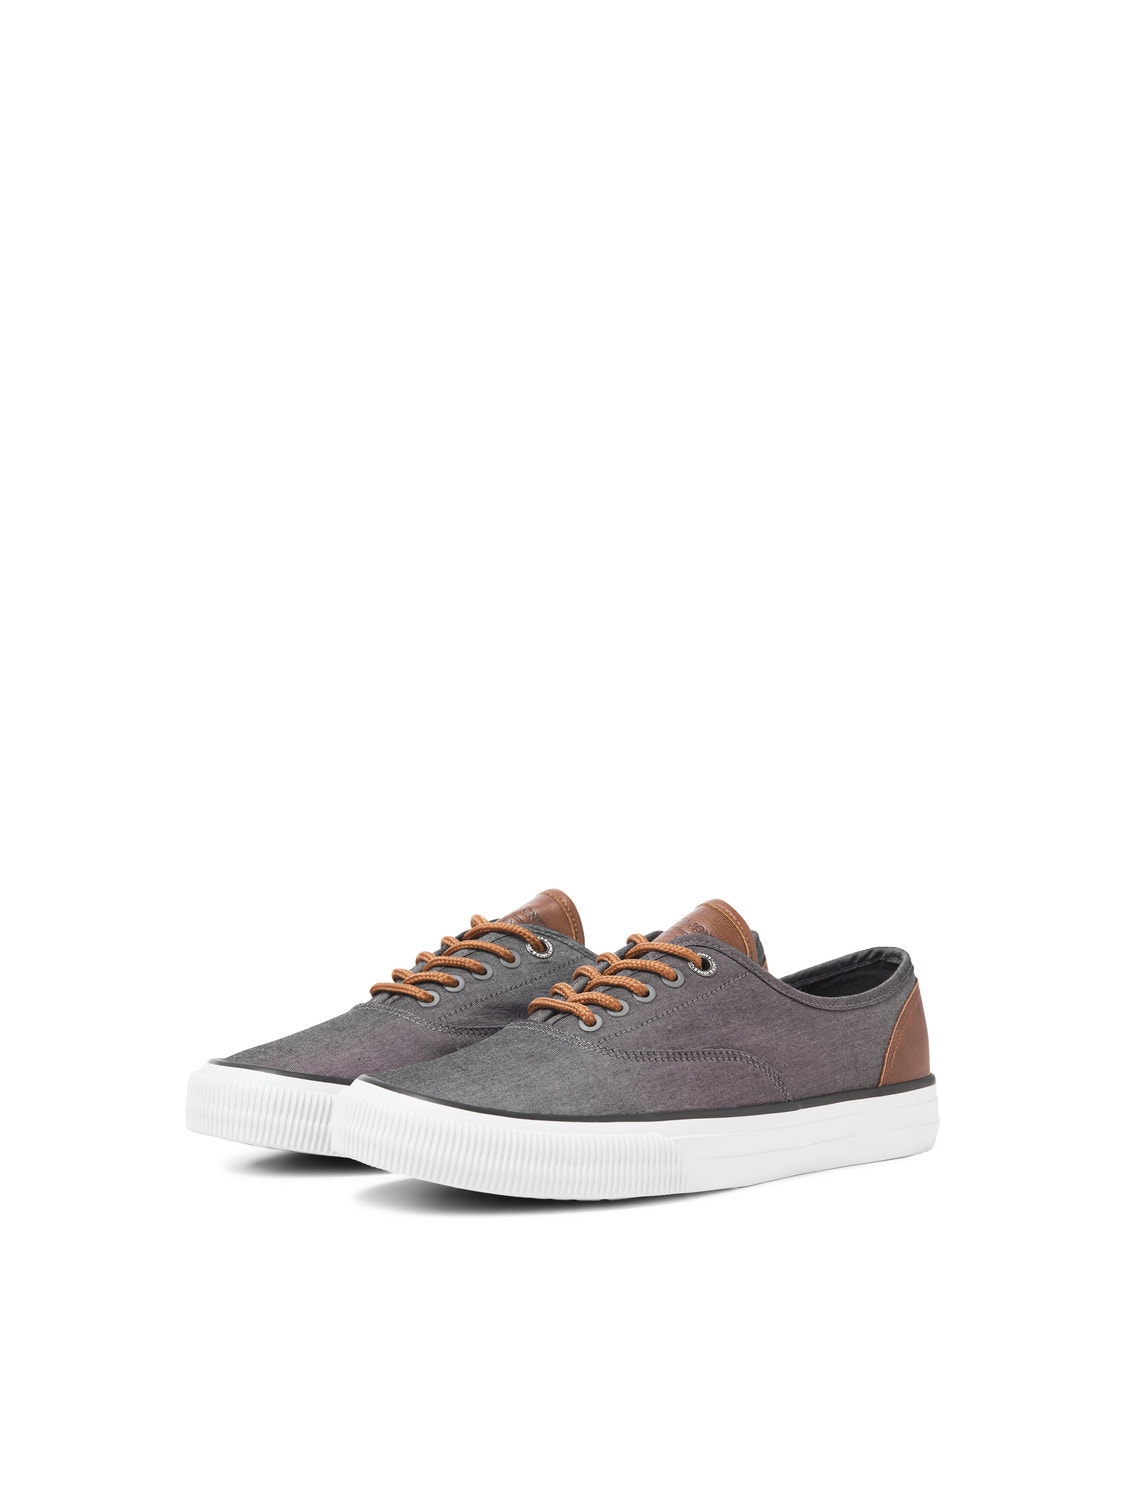 Jack & Jones Canvas Sneaker -Chambray Grey - 12229023